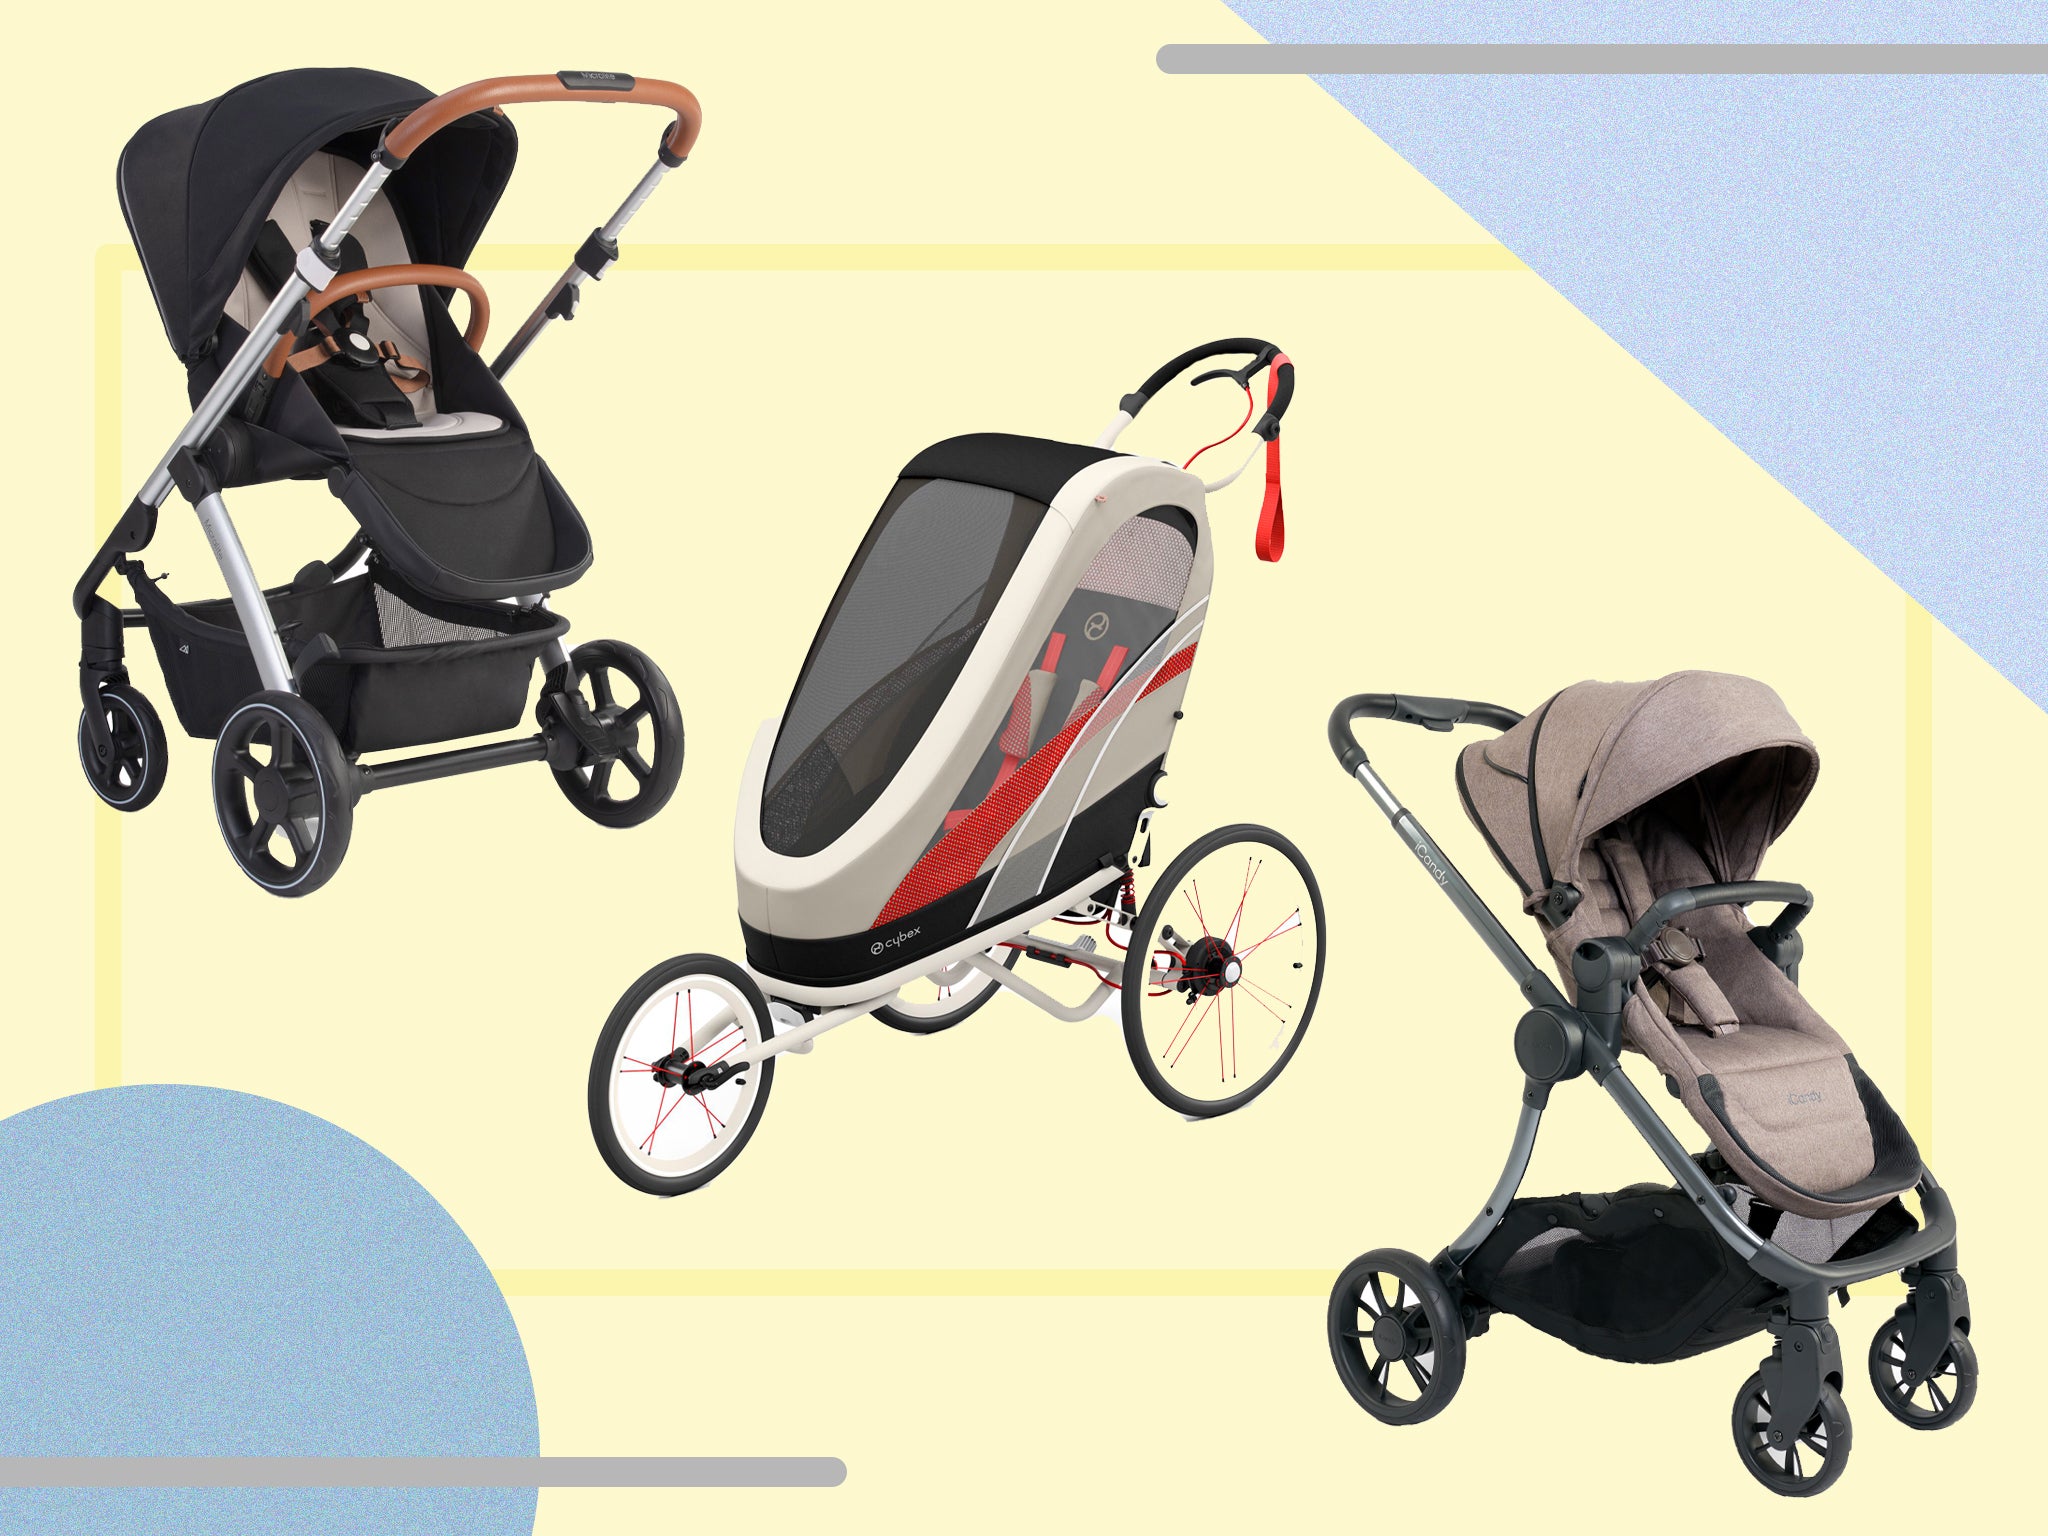 Black 3 in 1 Adjustable High View Baby Stroller Pram Travel System Baby Jogger City Tour Baby Stroller Lightweight Newborn Pram Infant Carriage Pushchair with Stroller Fan 